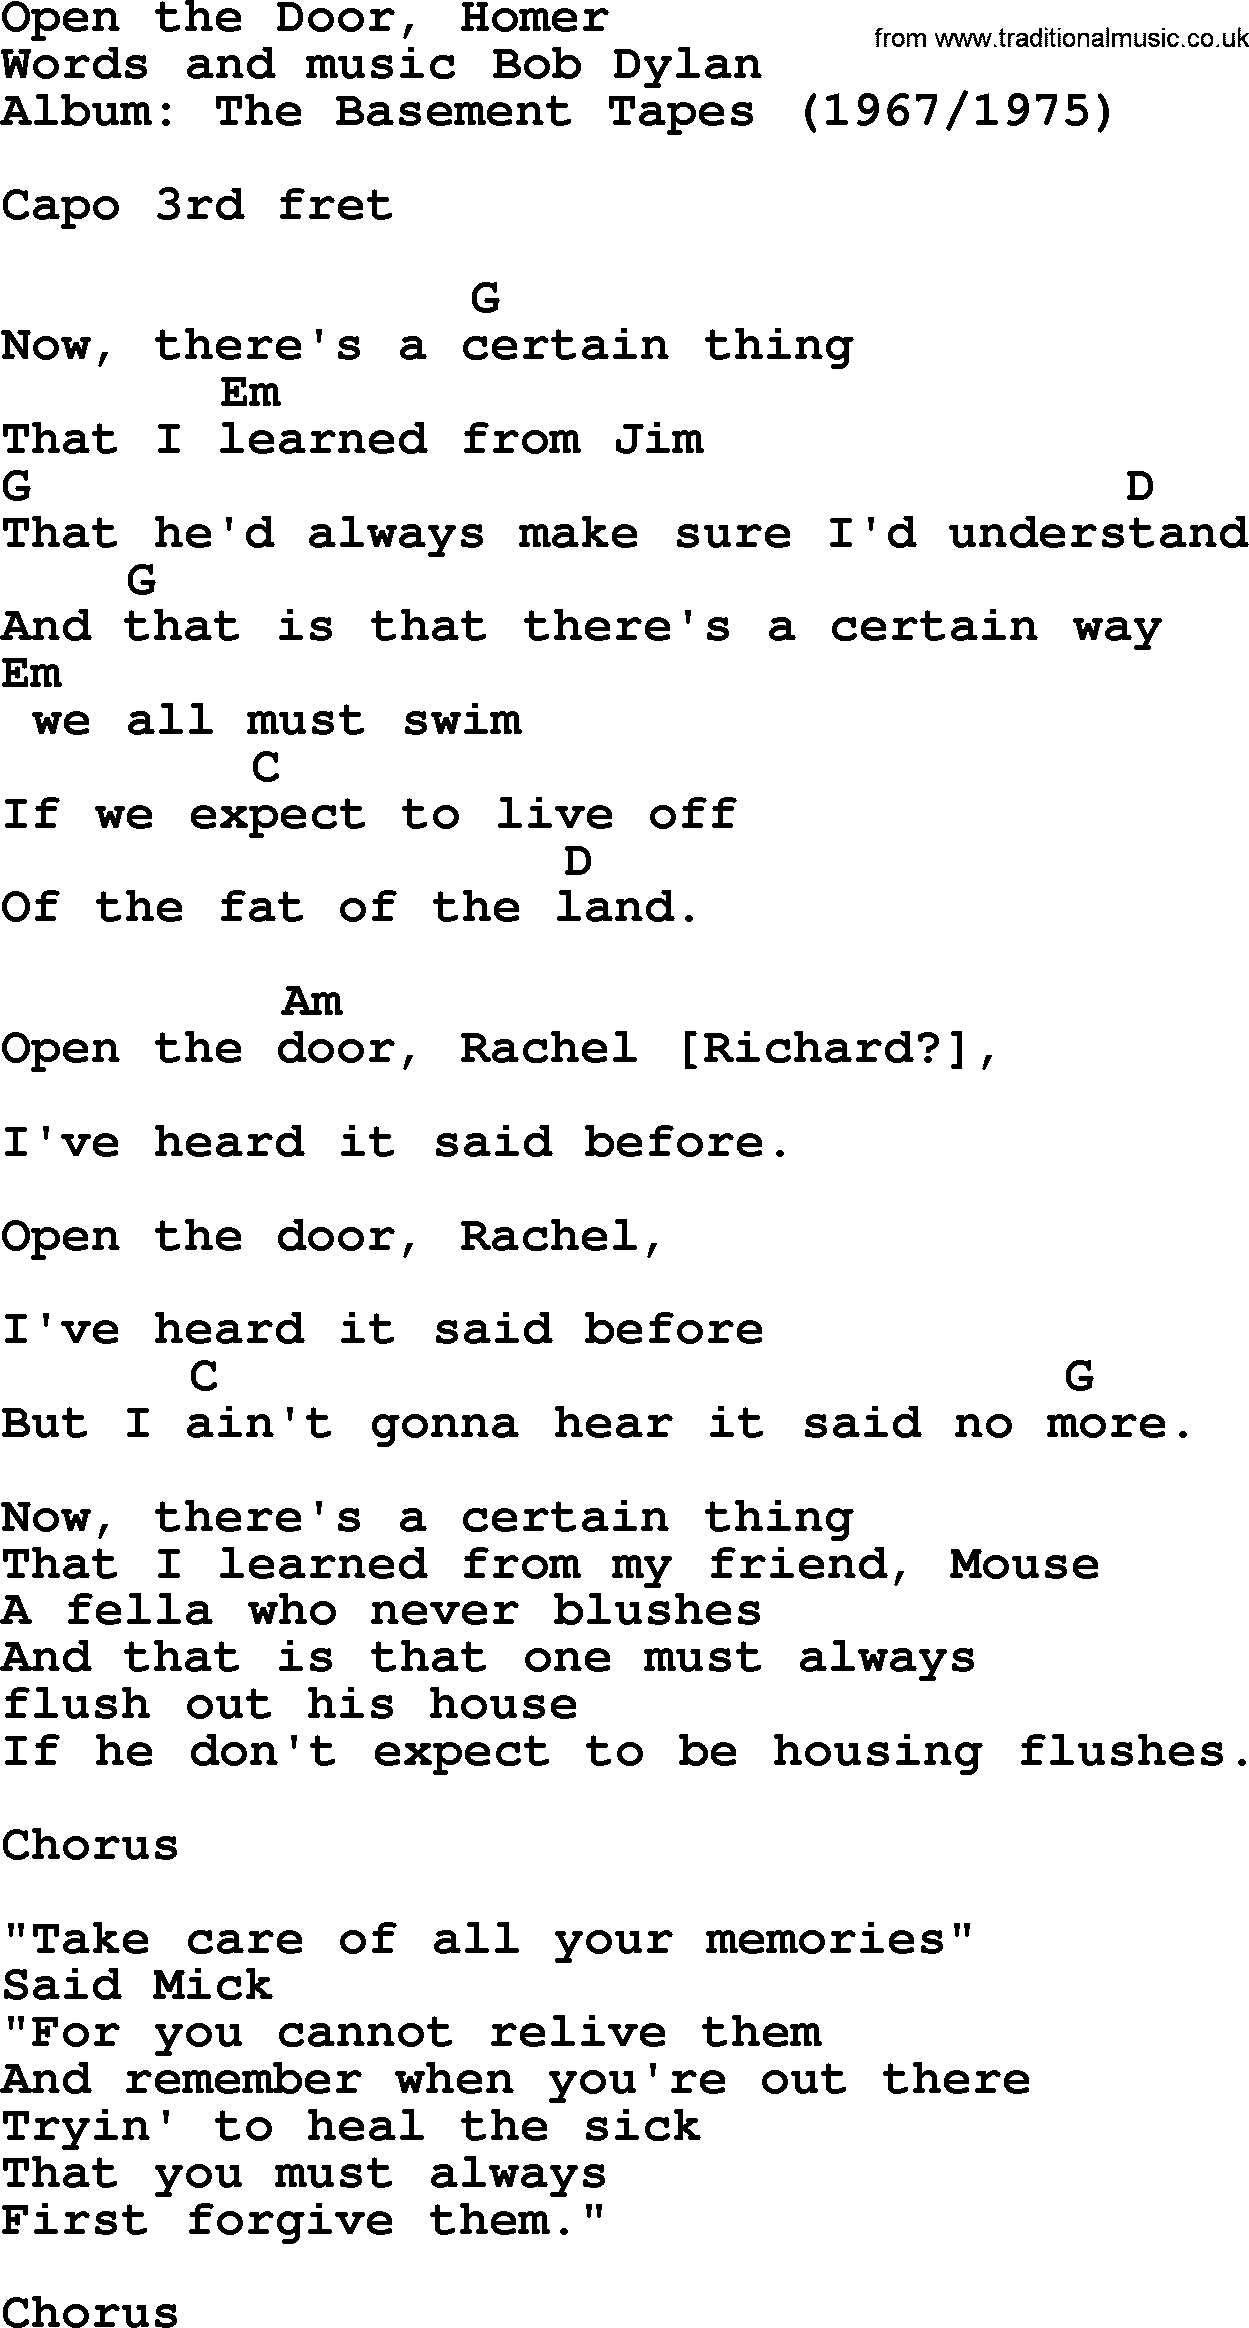 Bob Dylan song, lyrics with chords - Open the Door, Homer